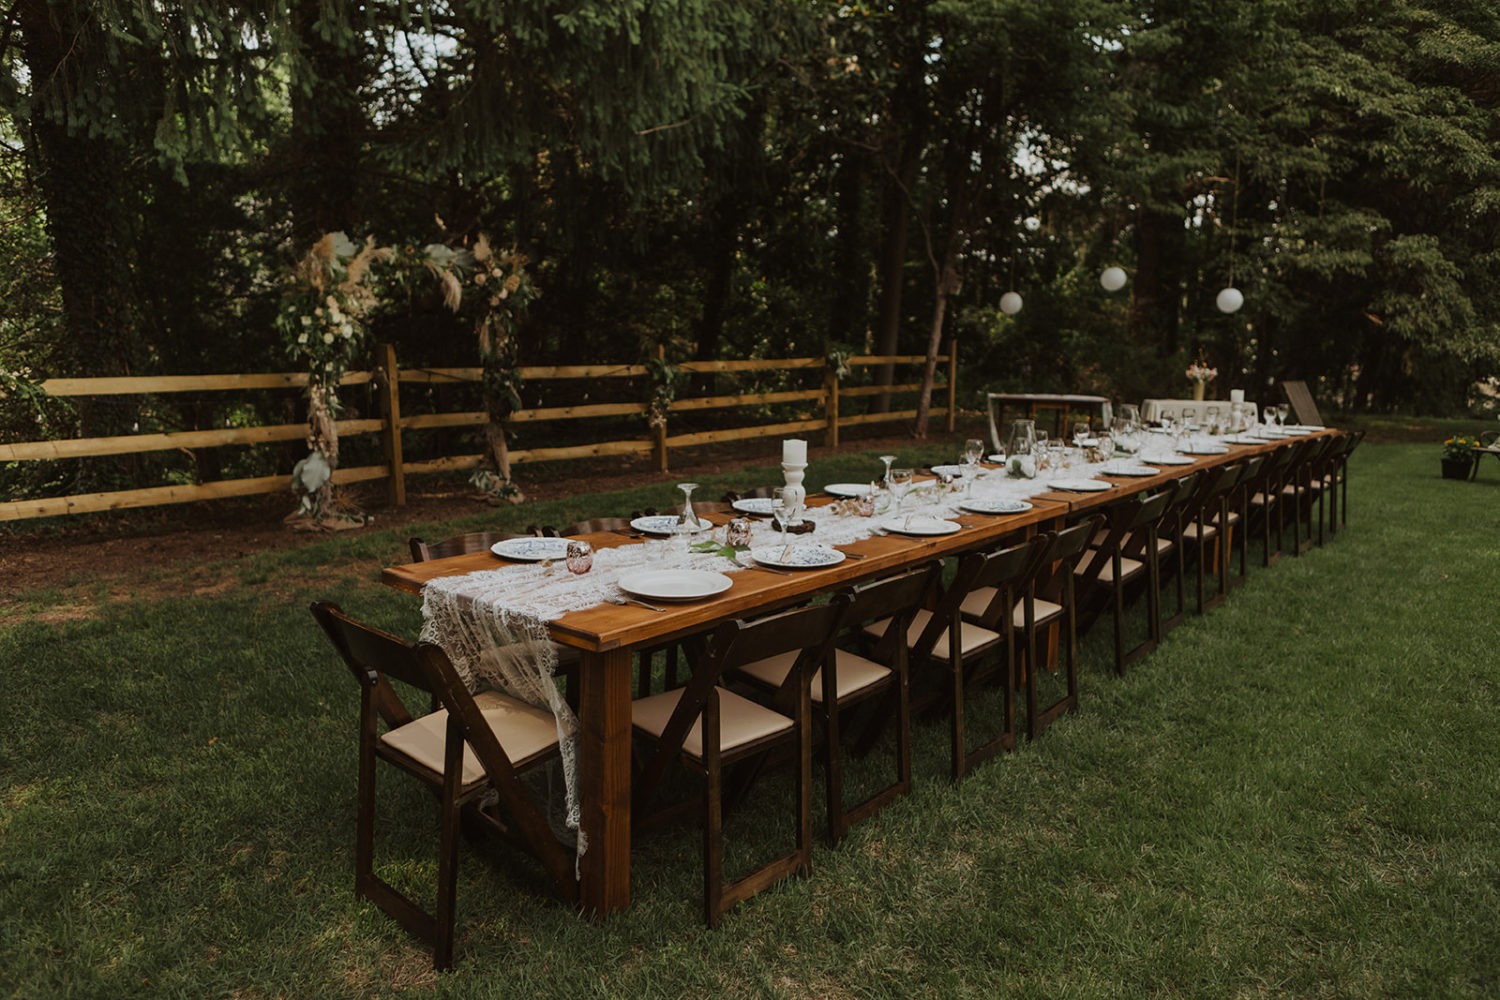 Table setting on backyard wedding reception table